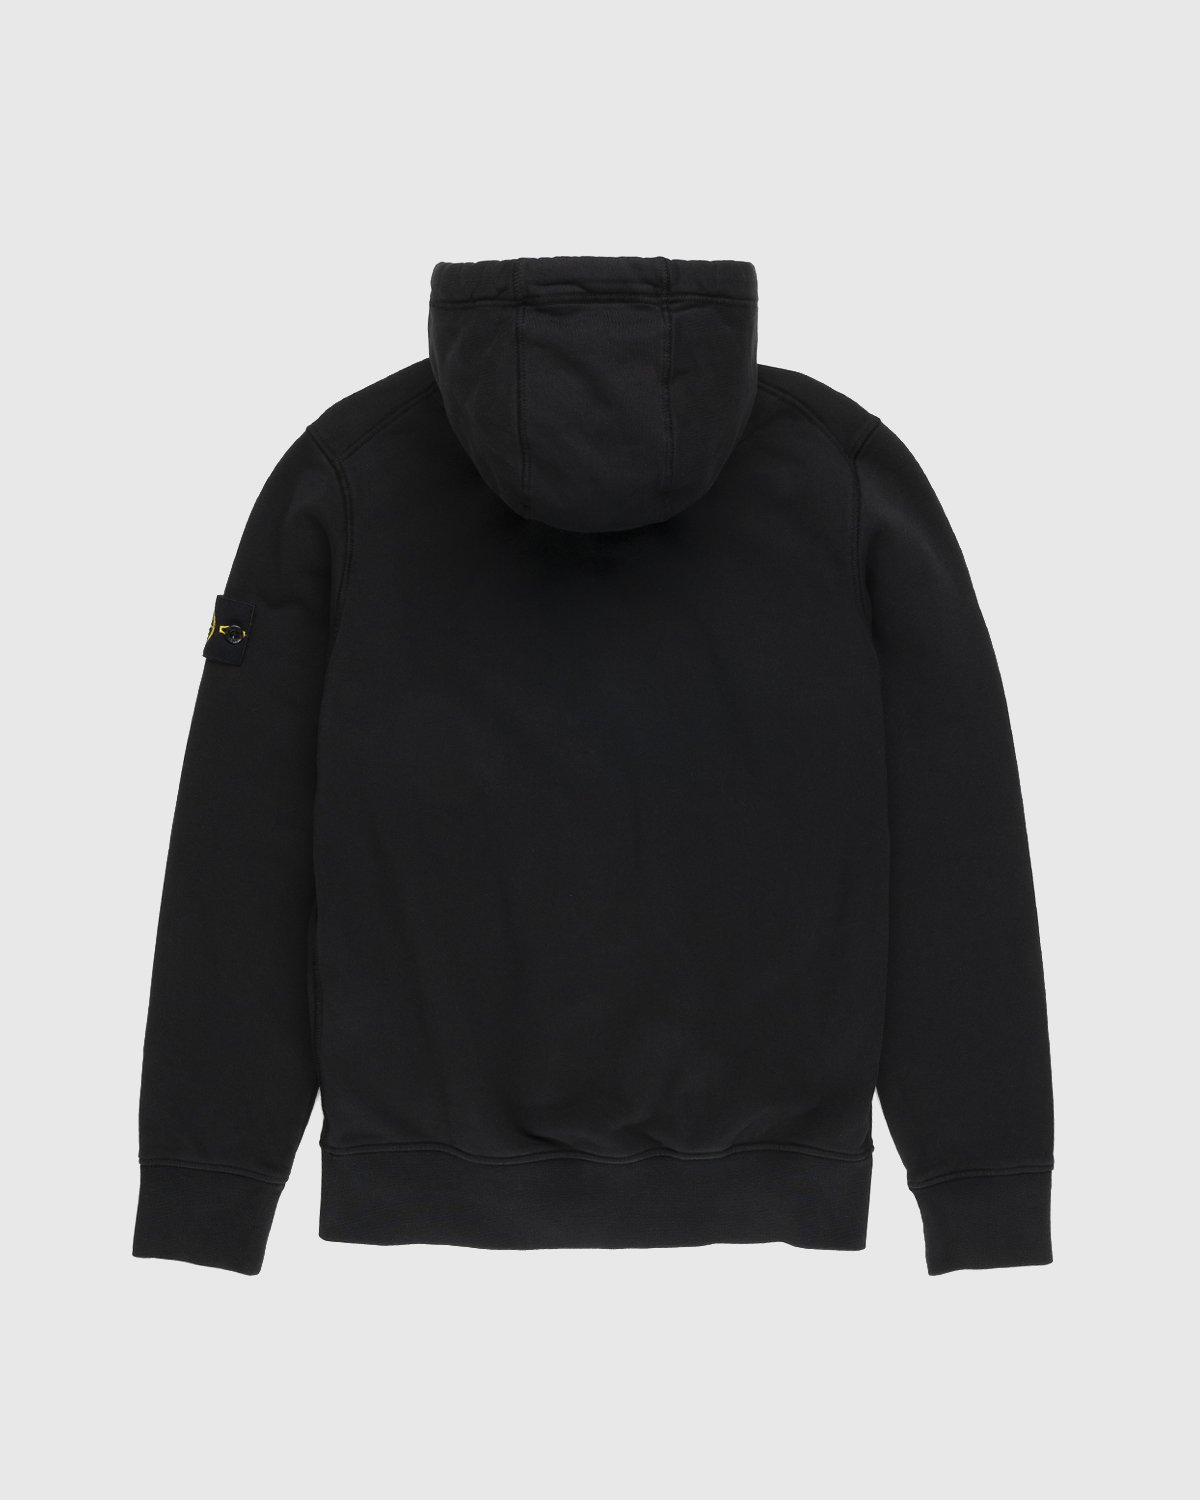 Stone Island - 64251 Garment-Dyed Full-Zip Hoodie Black - Clothing - Black - Image 2